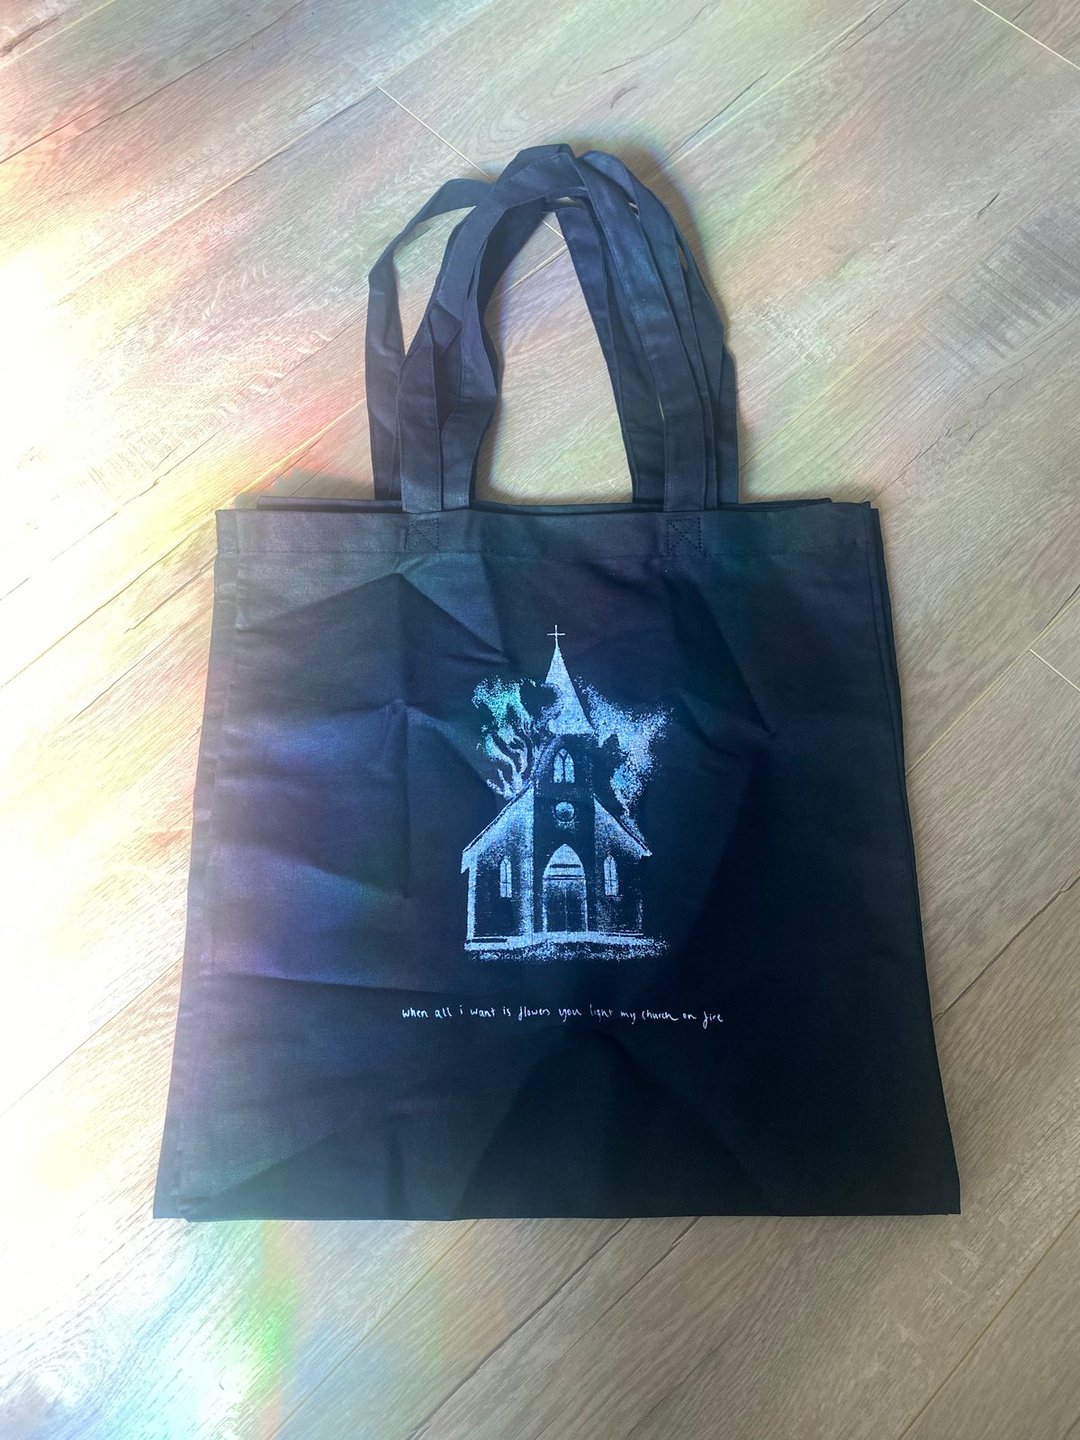 burning church tote bag image